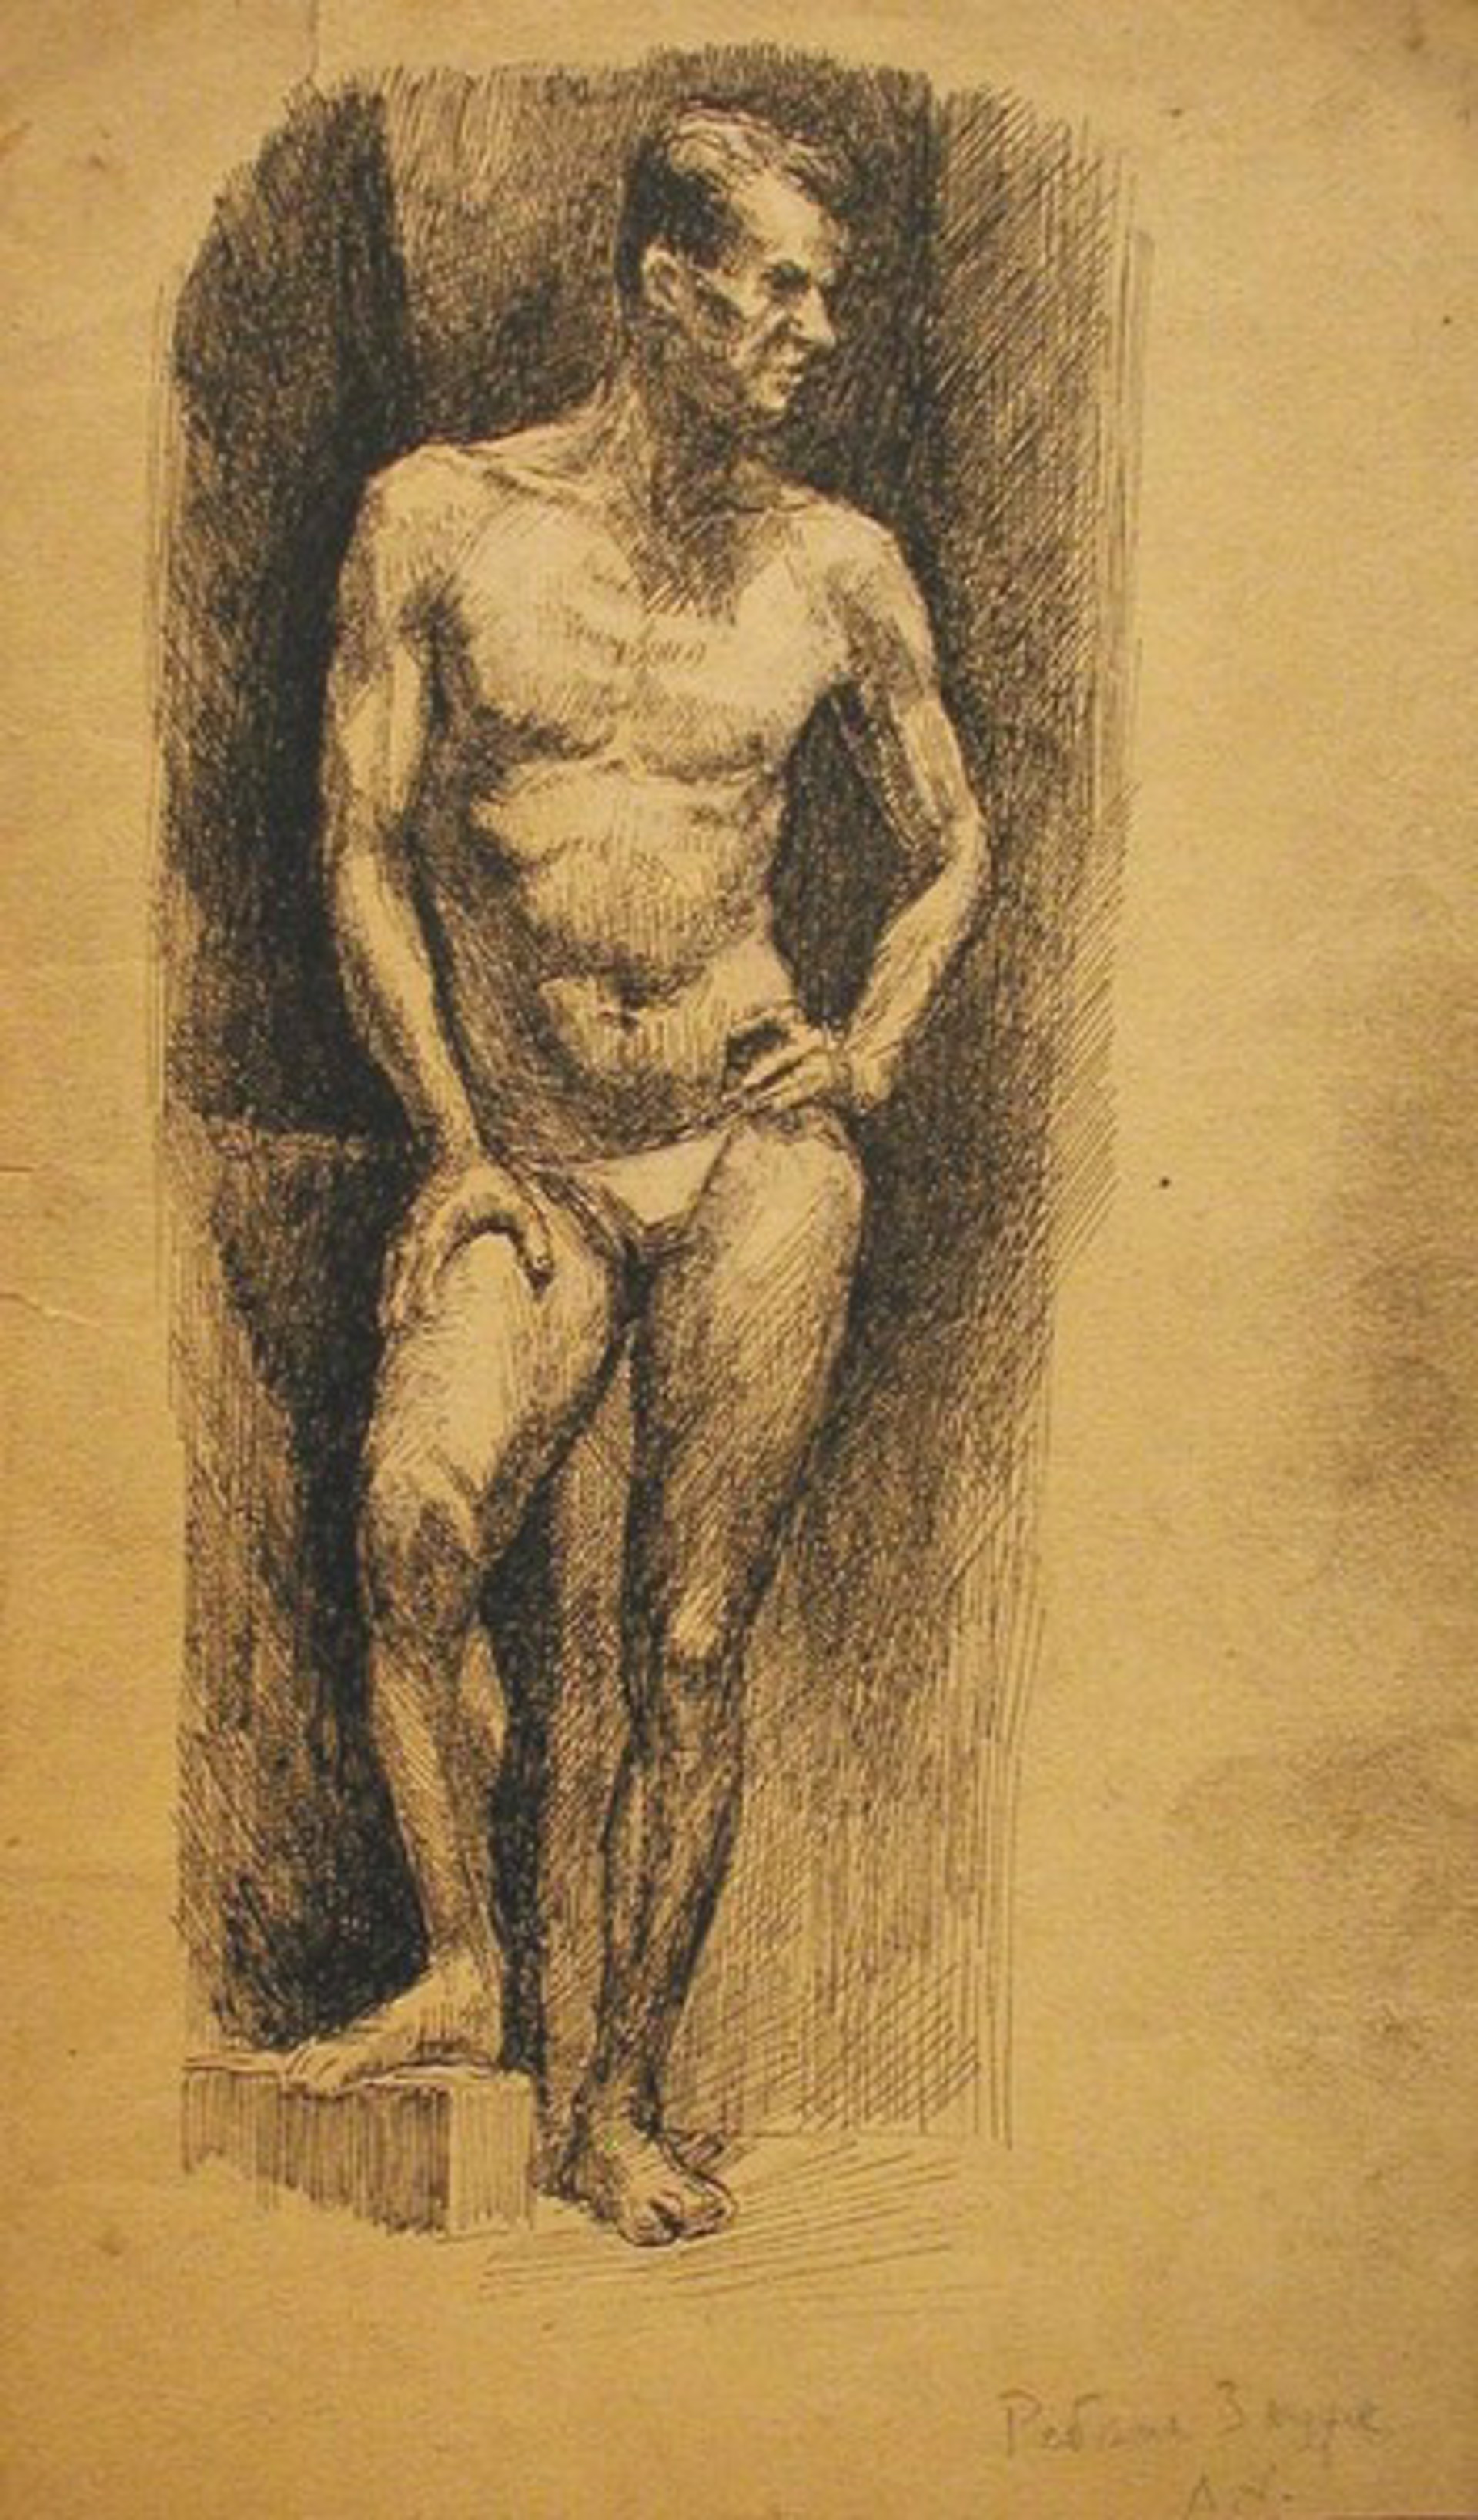 Sketch of a Man by Erikh Rebane